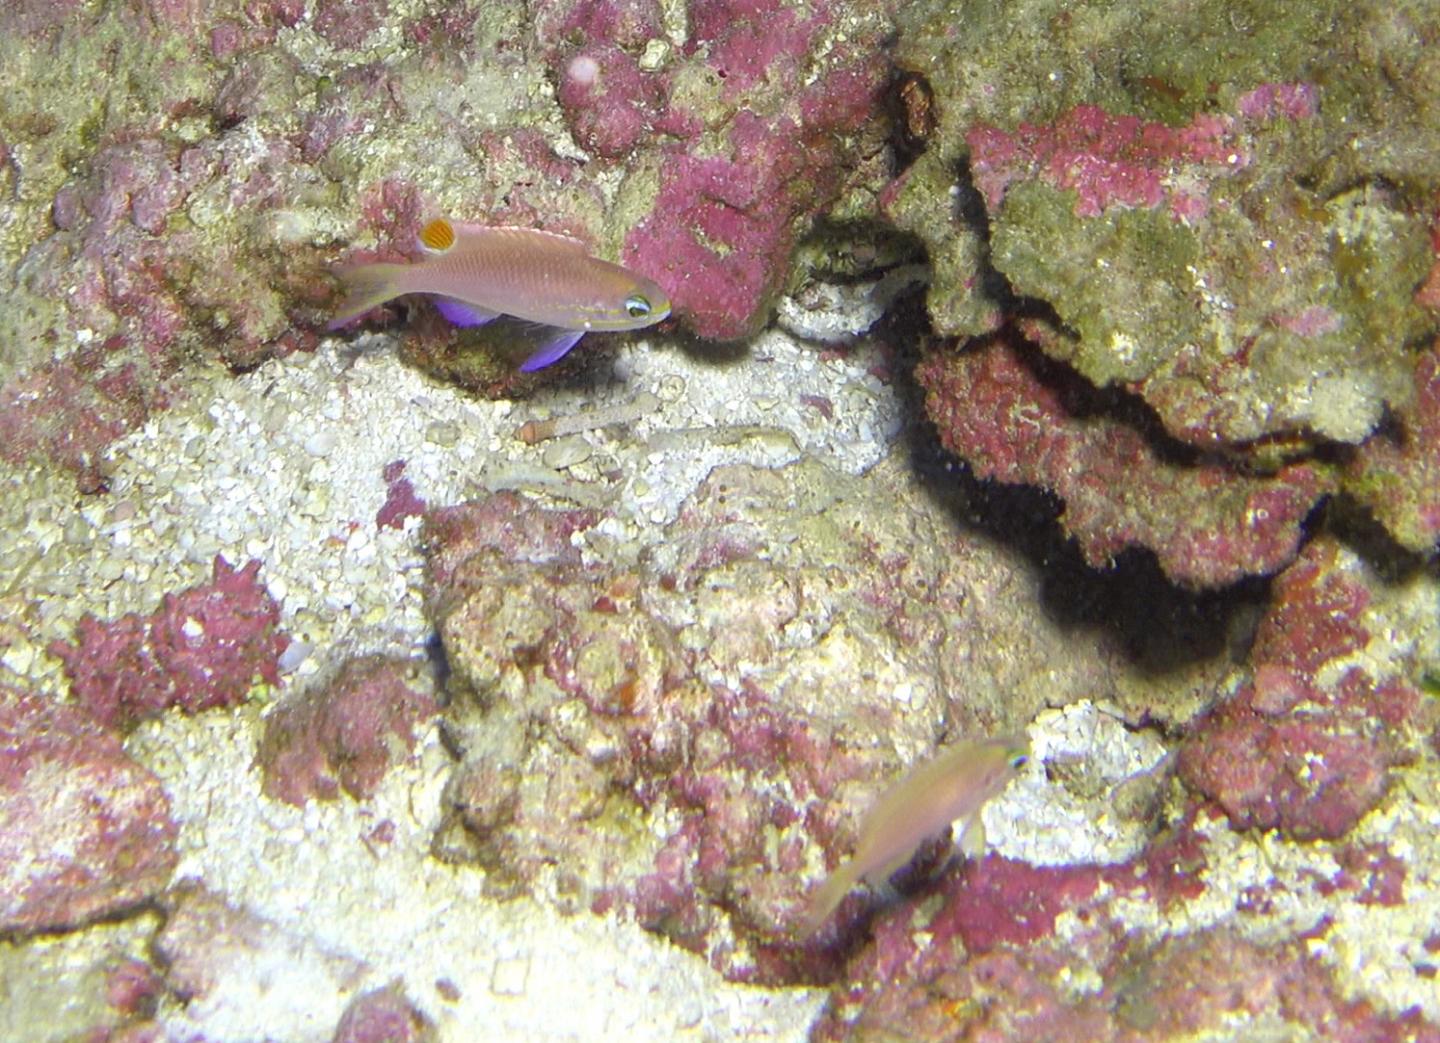 A Male Fish Alongside Presumed Female